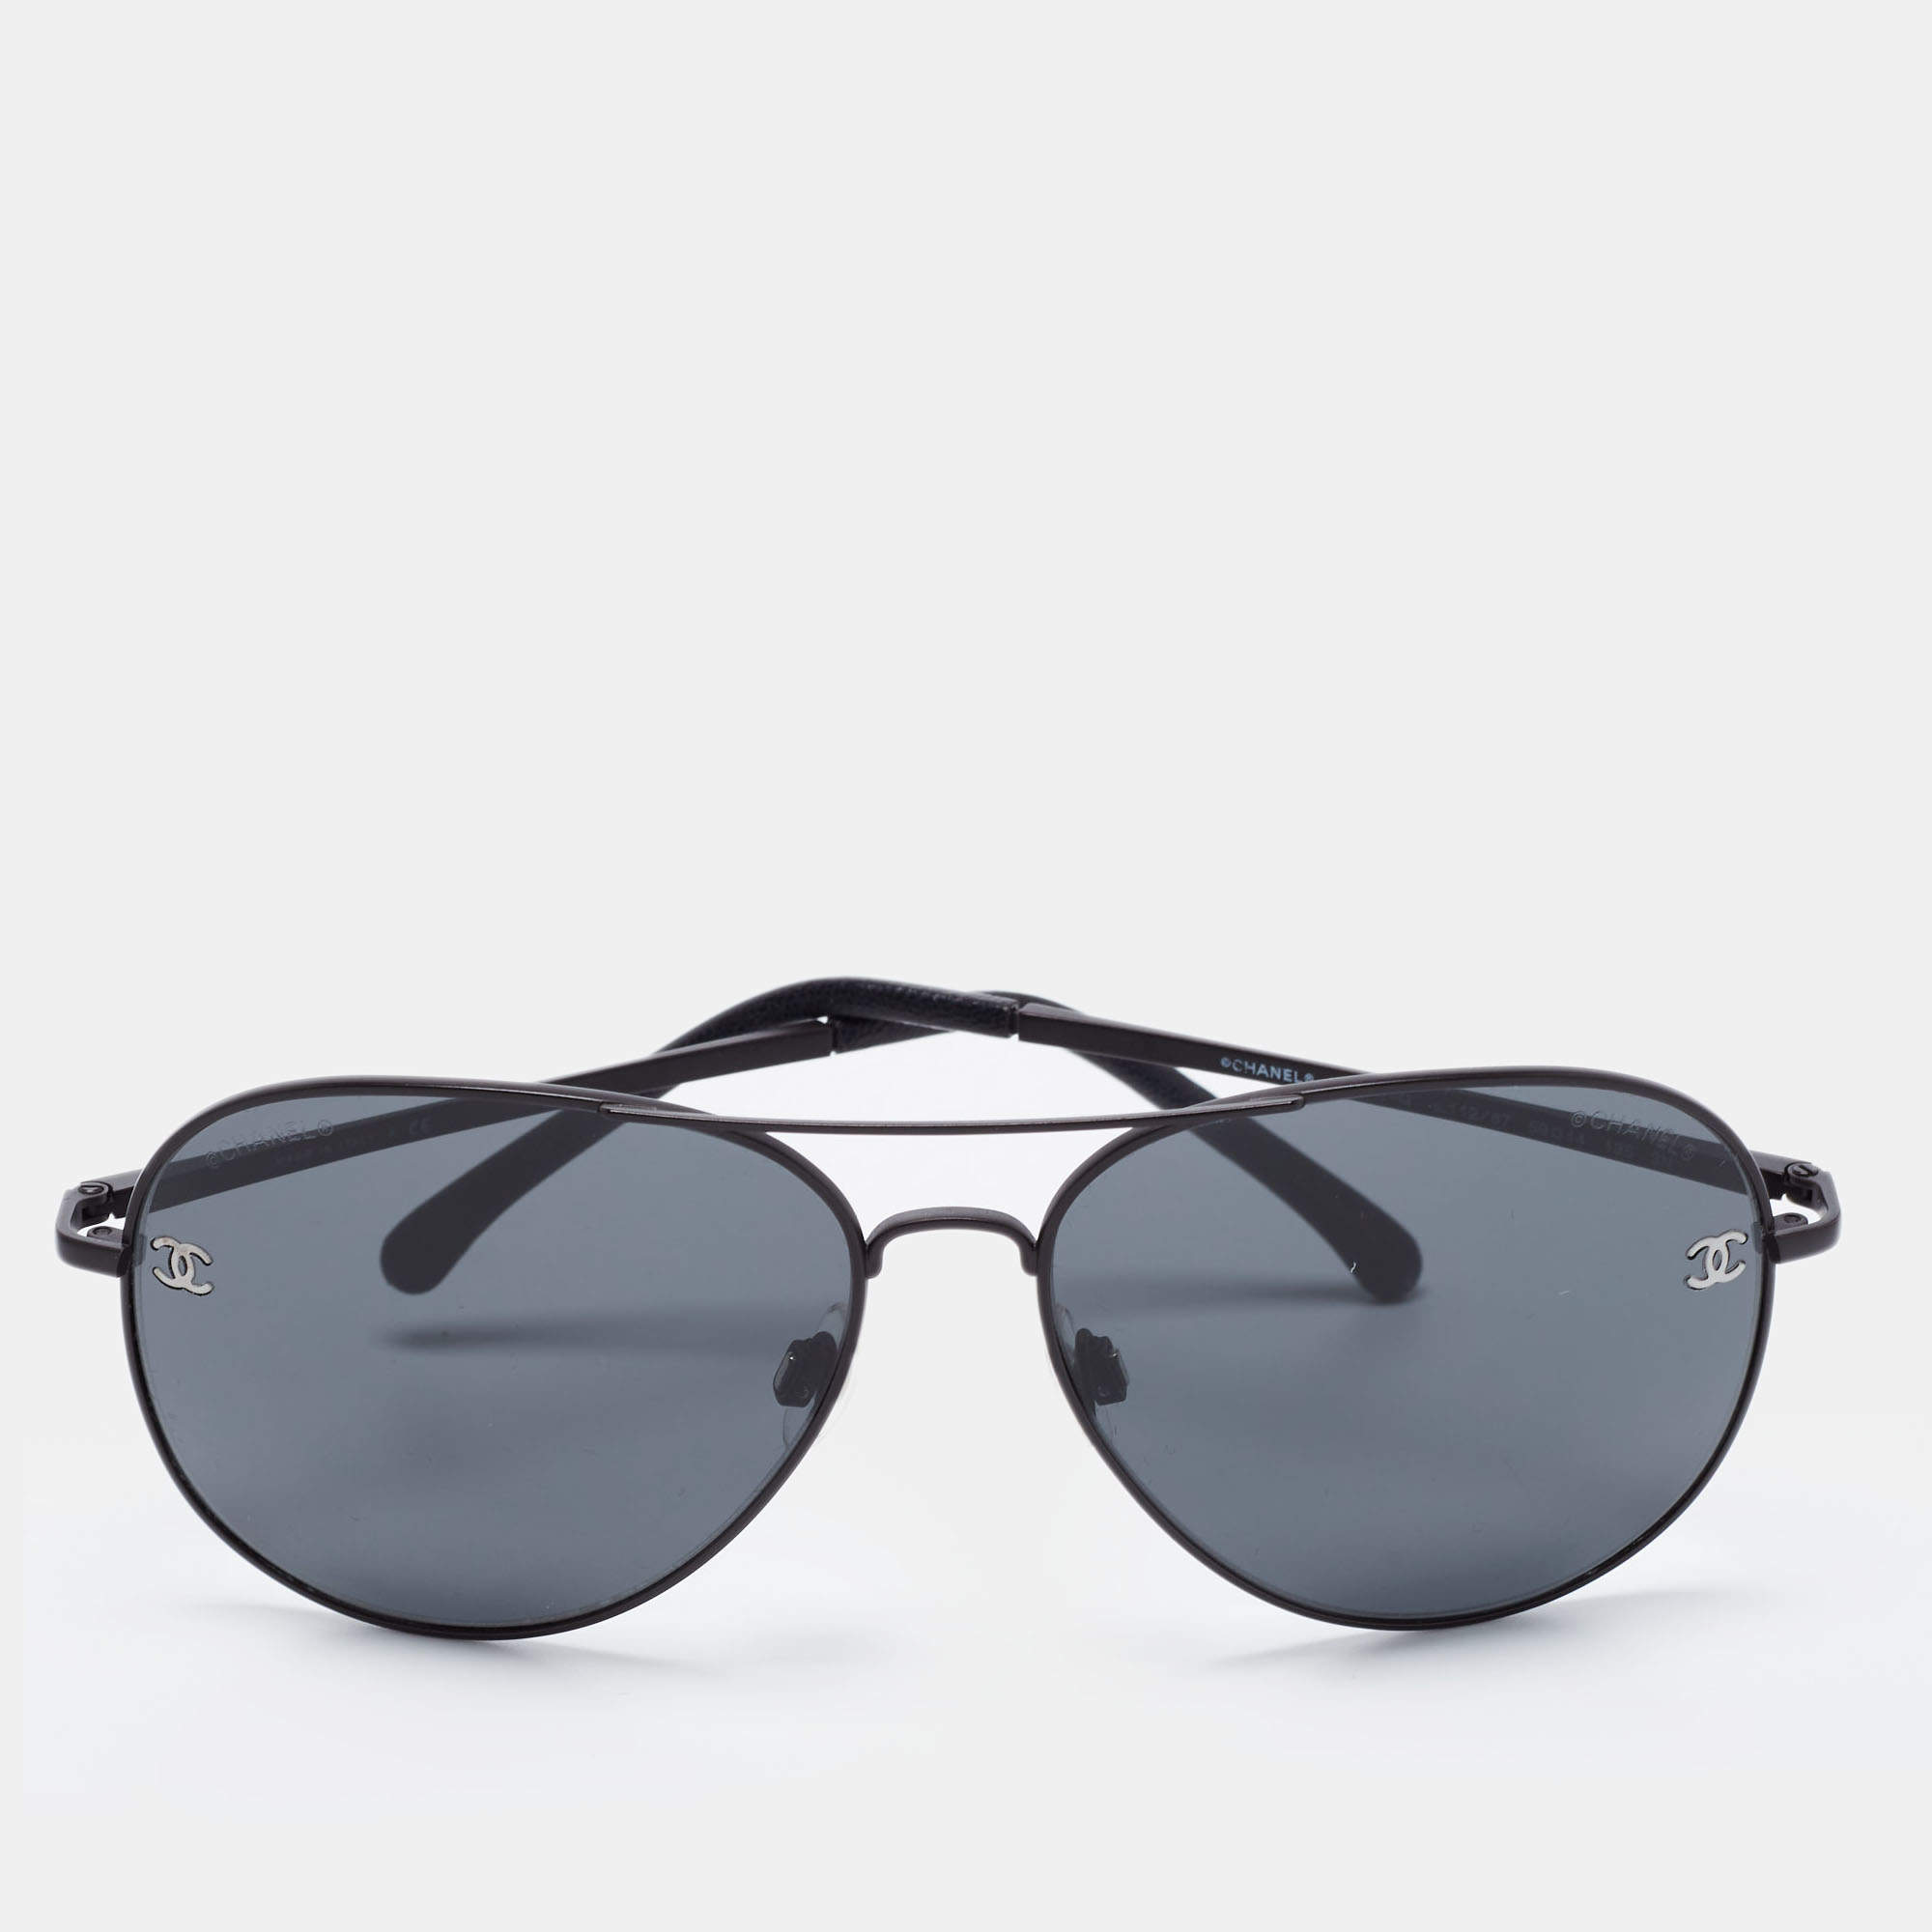 Chanel Black Acetate And Rhinestone Sunglasses